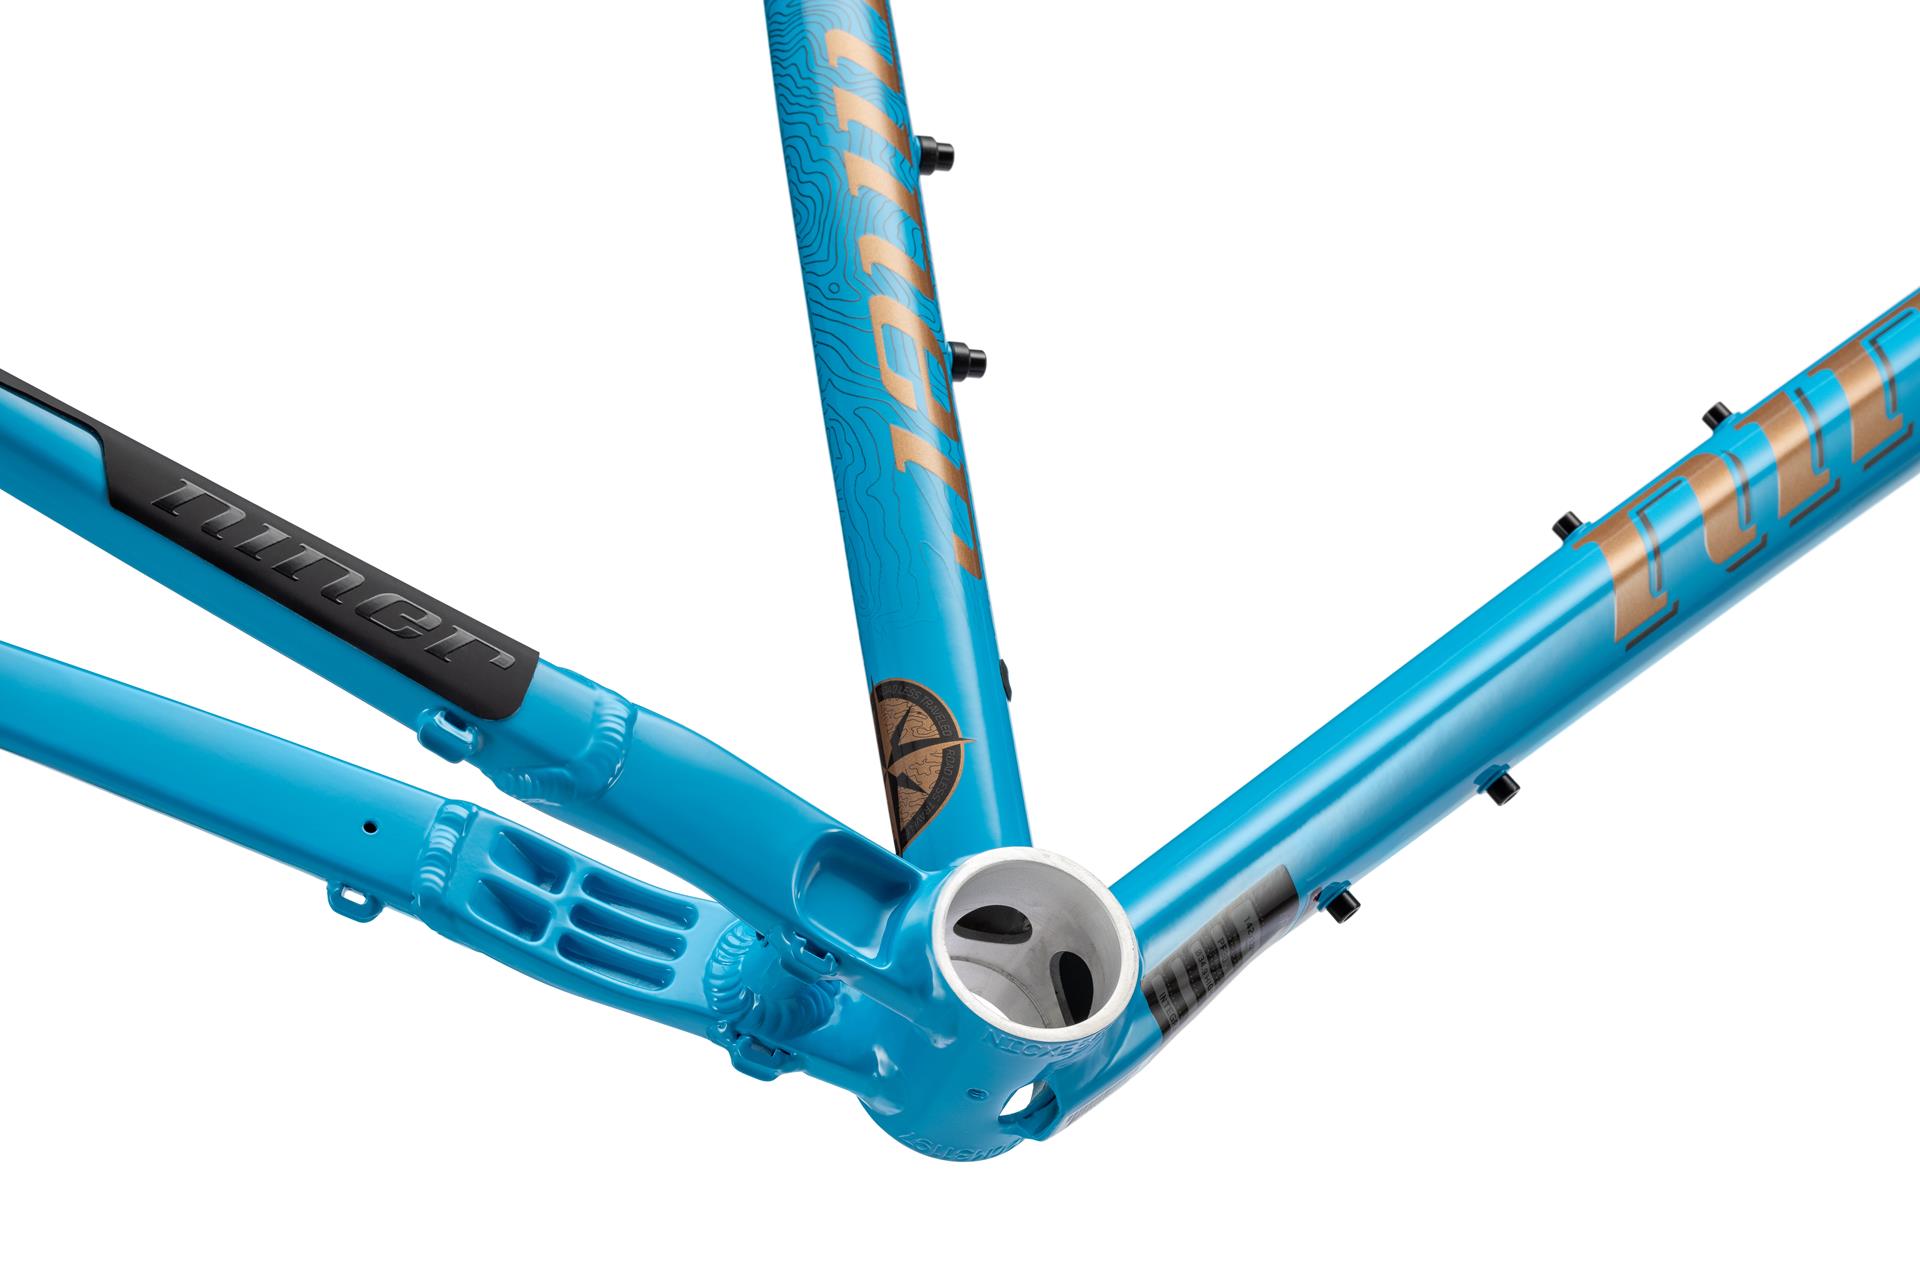 Niner RLT 2-star велосипед, голубой, 56